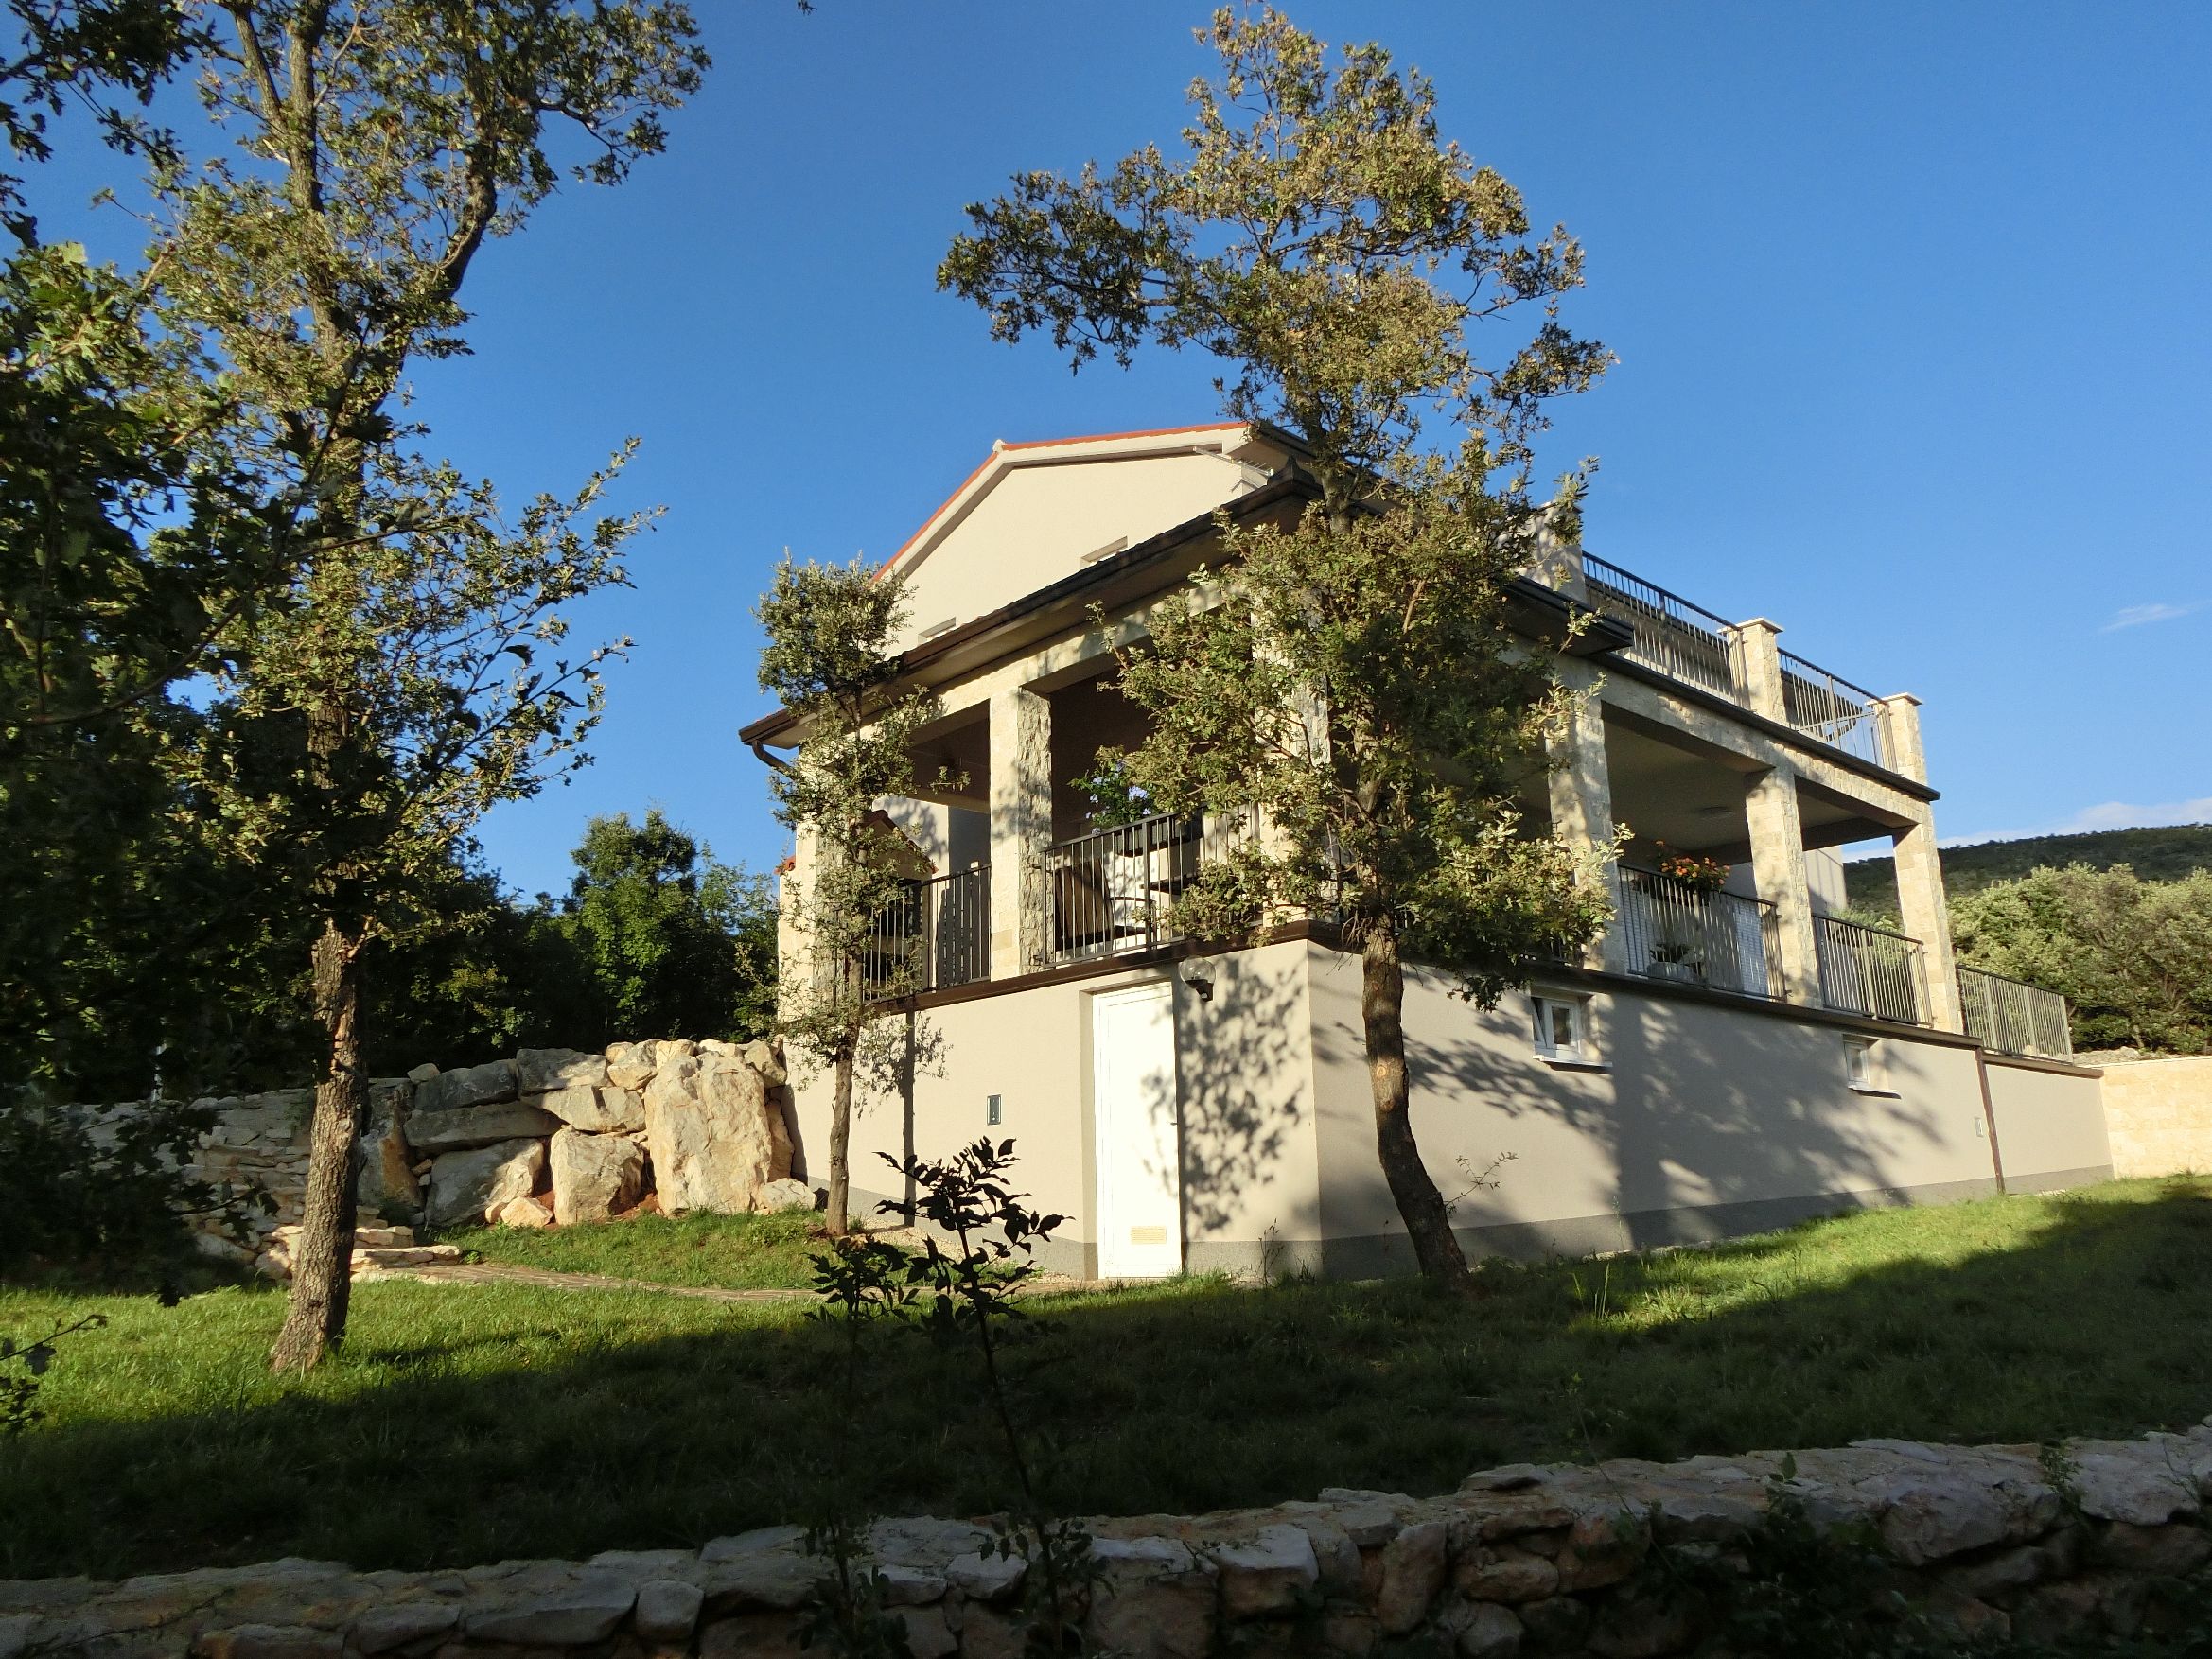 Villa Nicole